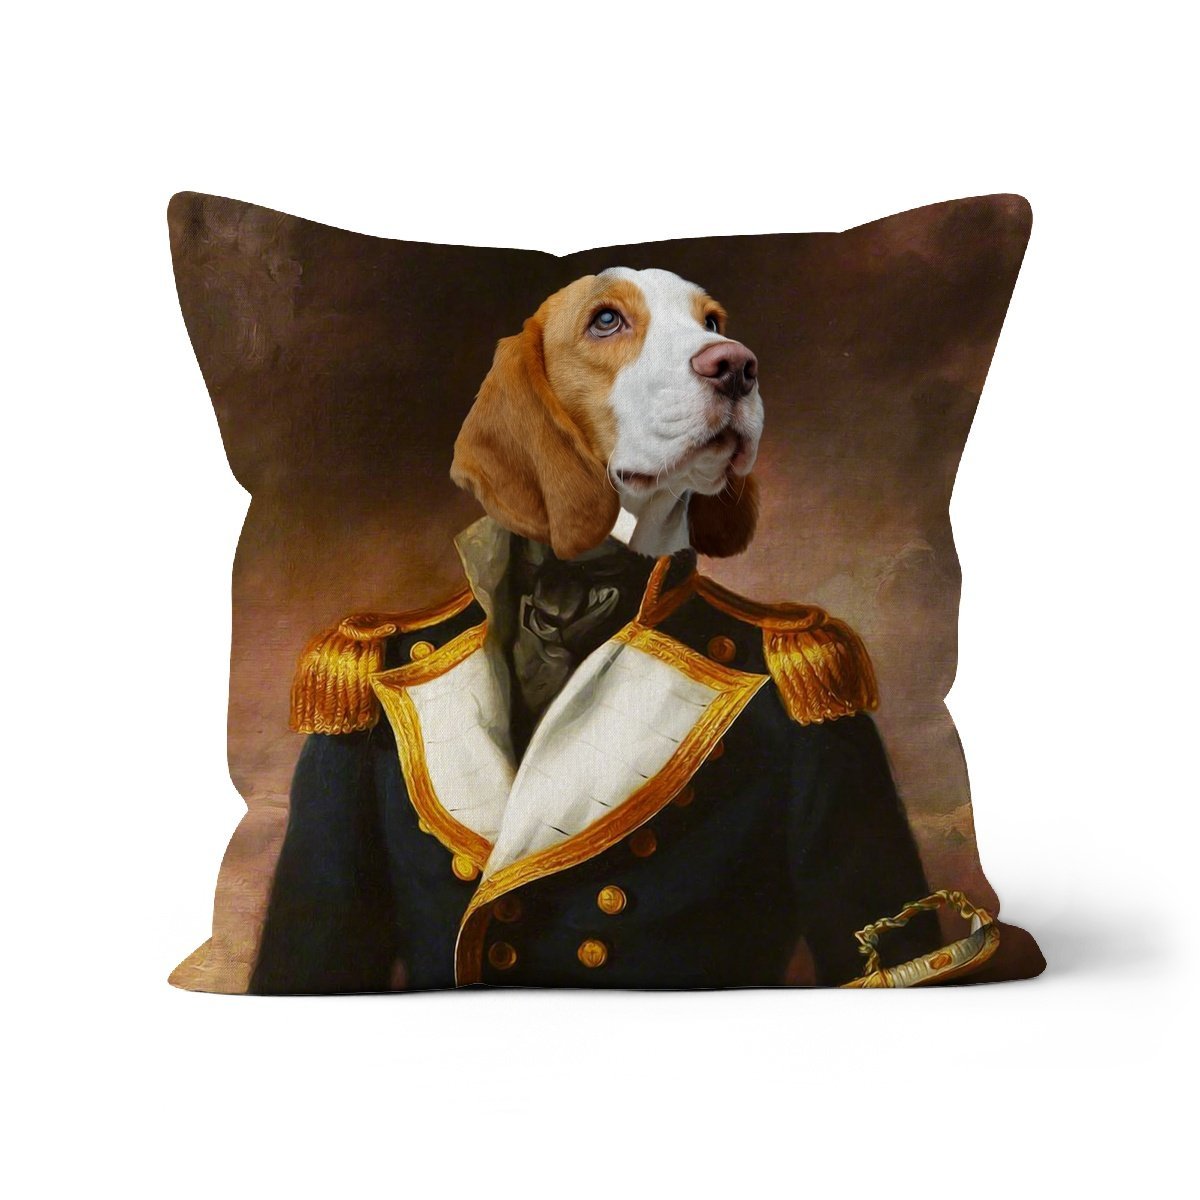 The Admiral: Custom Pet Cushion - Paw & Glory - #pet portraits# - #dog portraits# - #pet portraits uk#paw & glory, custom pet portrait pillow,custom pillow of your pet, dog personalized pillow, custom pillow cover, dog shaped pillows, dog pillows personalized